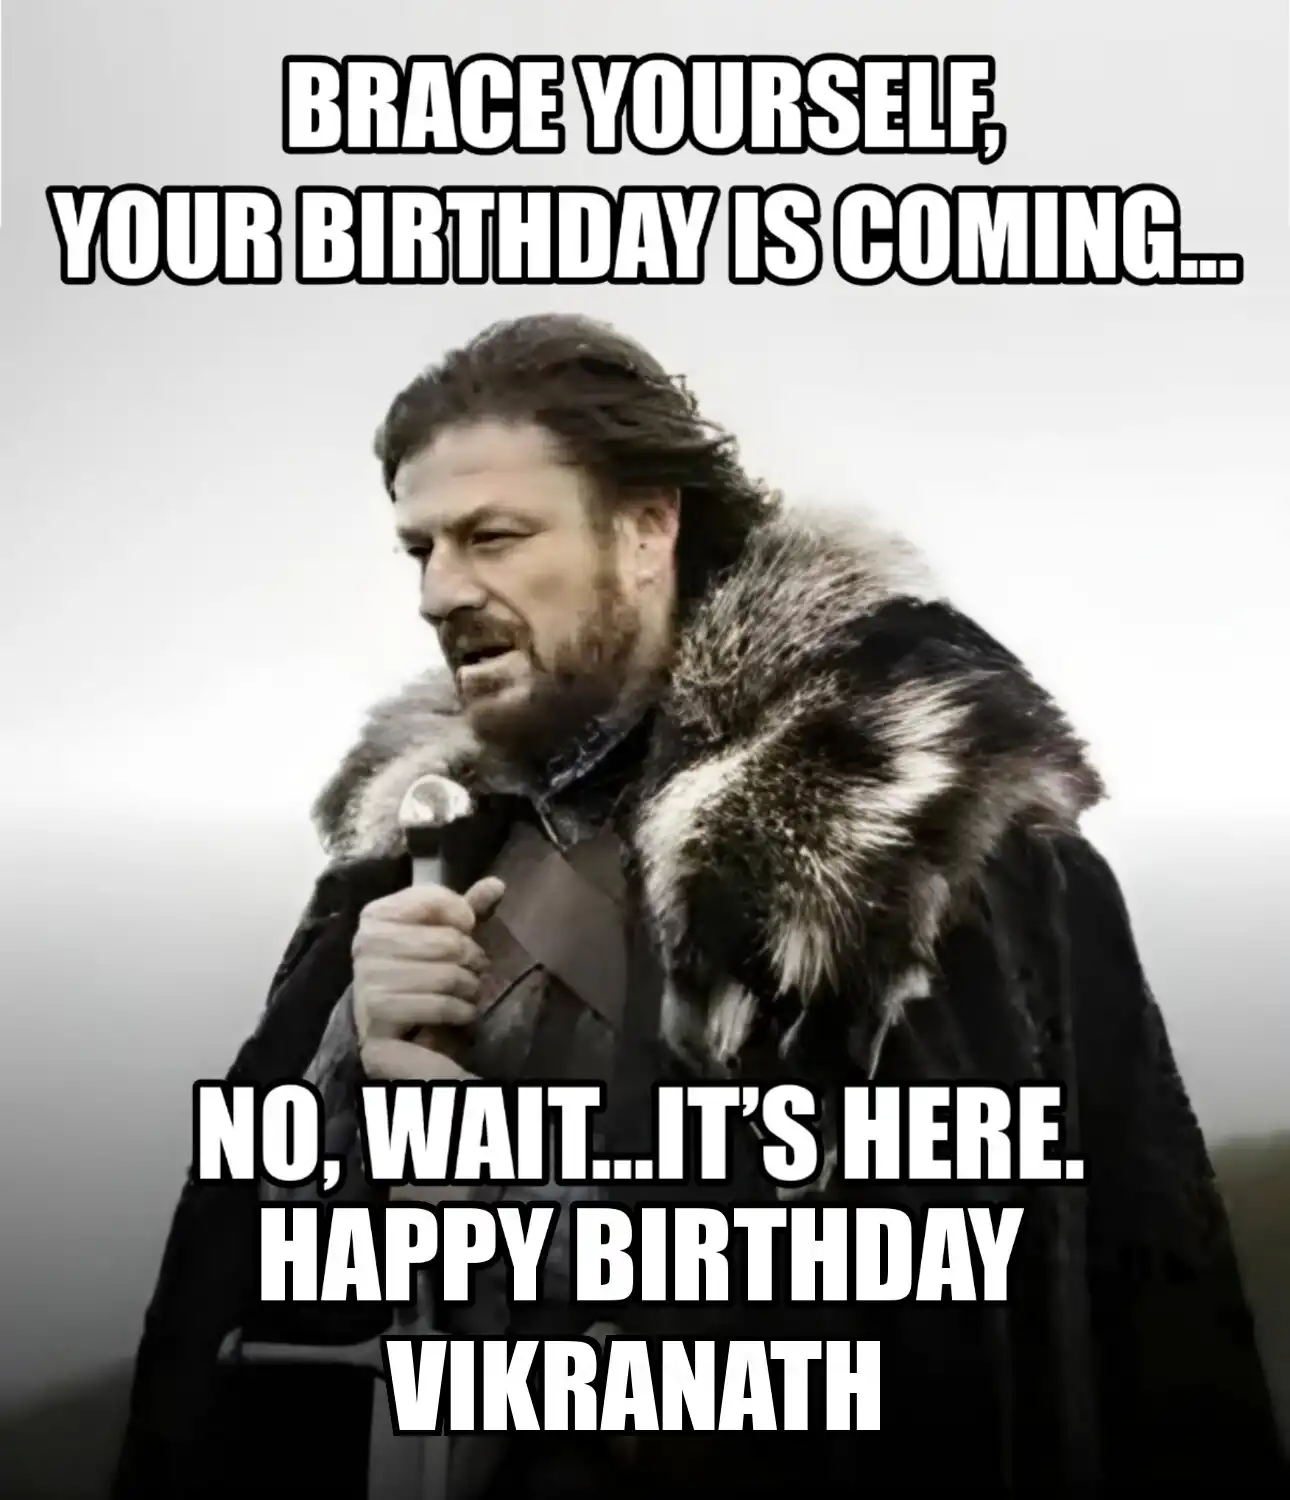 Happy Birthday Vikranath Brace Yourself Your Birthday Is Coming Meme